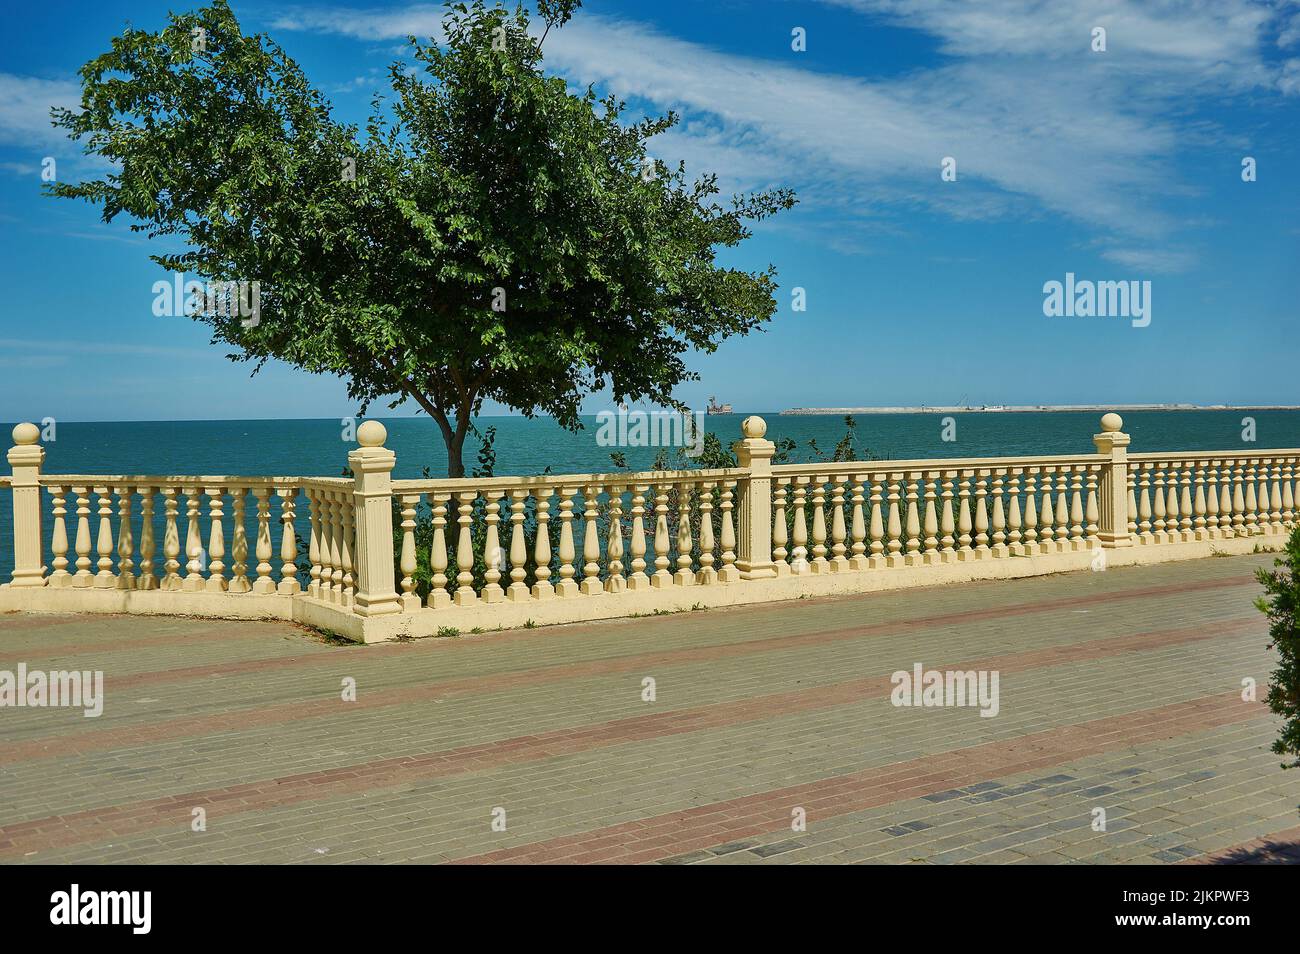 Kaspiysk,  city in the Republic of Dagestan, Russia, located on the Caspian Sea Stock Photo